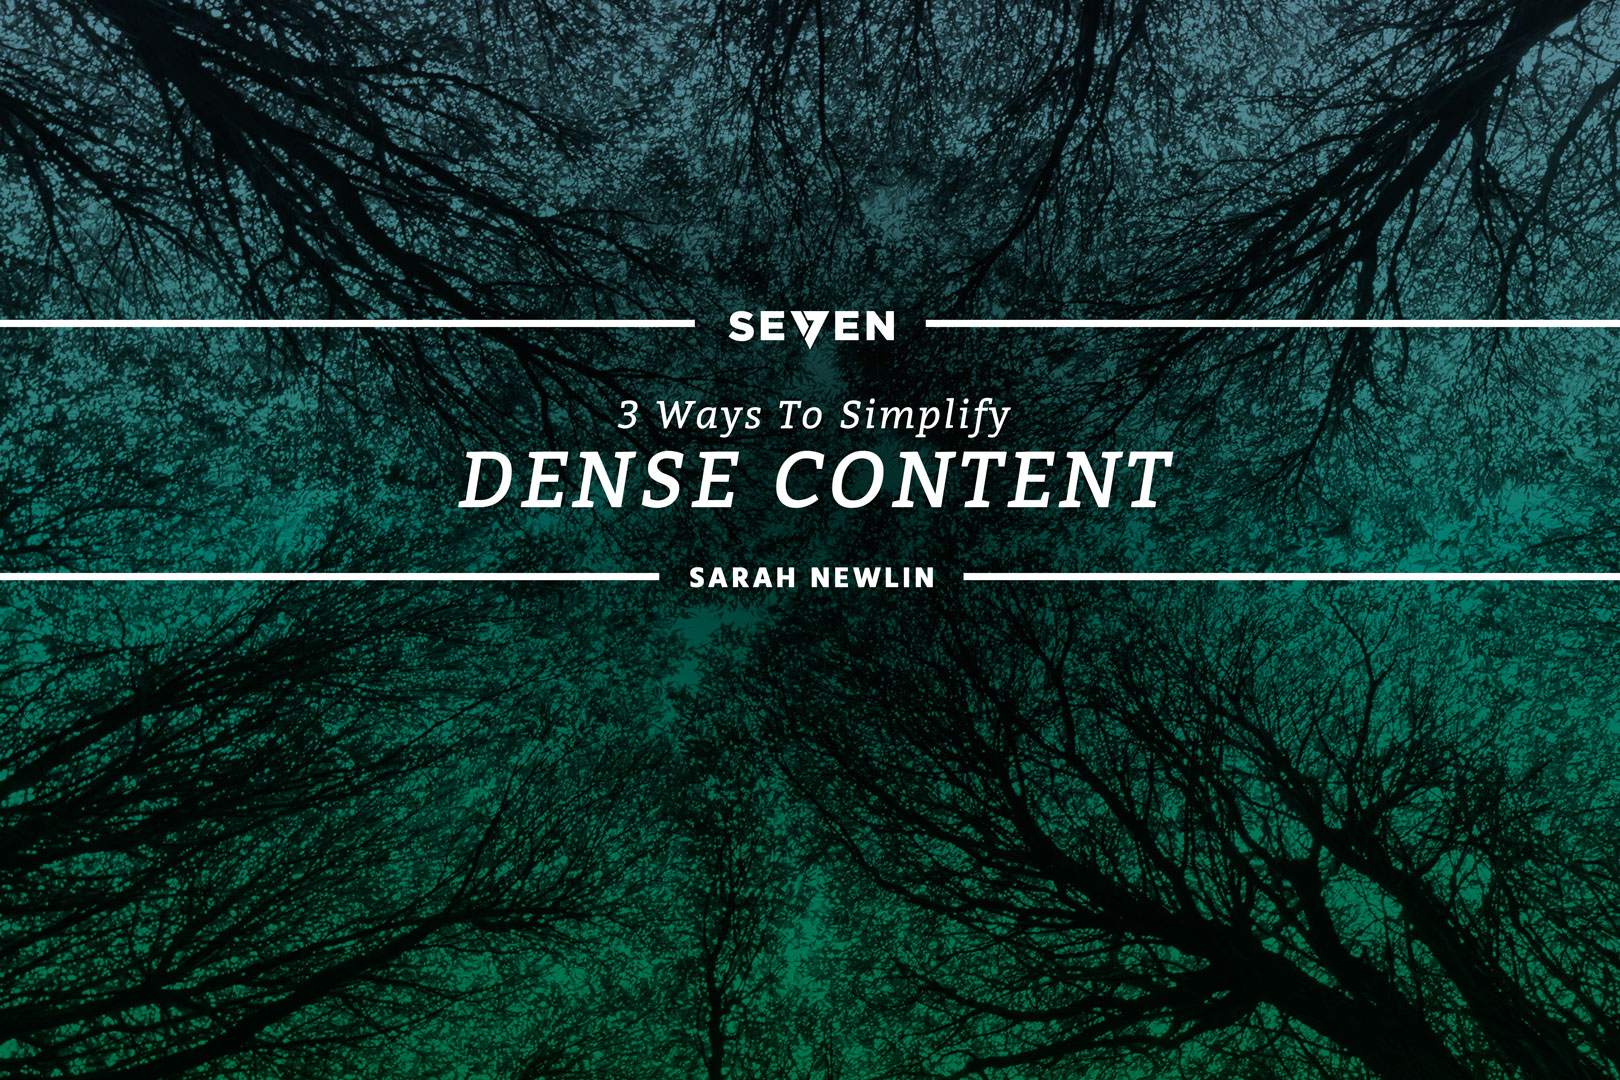 3 Ways to Simplify Dense Content